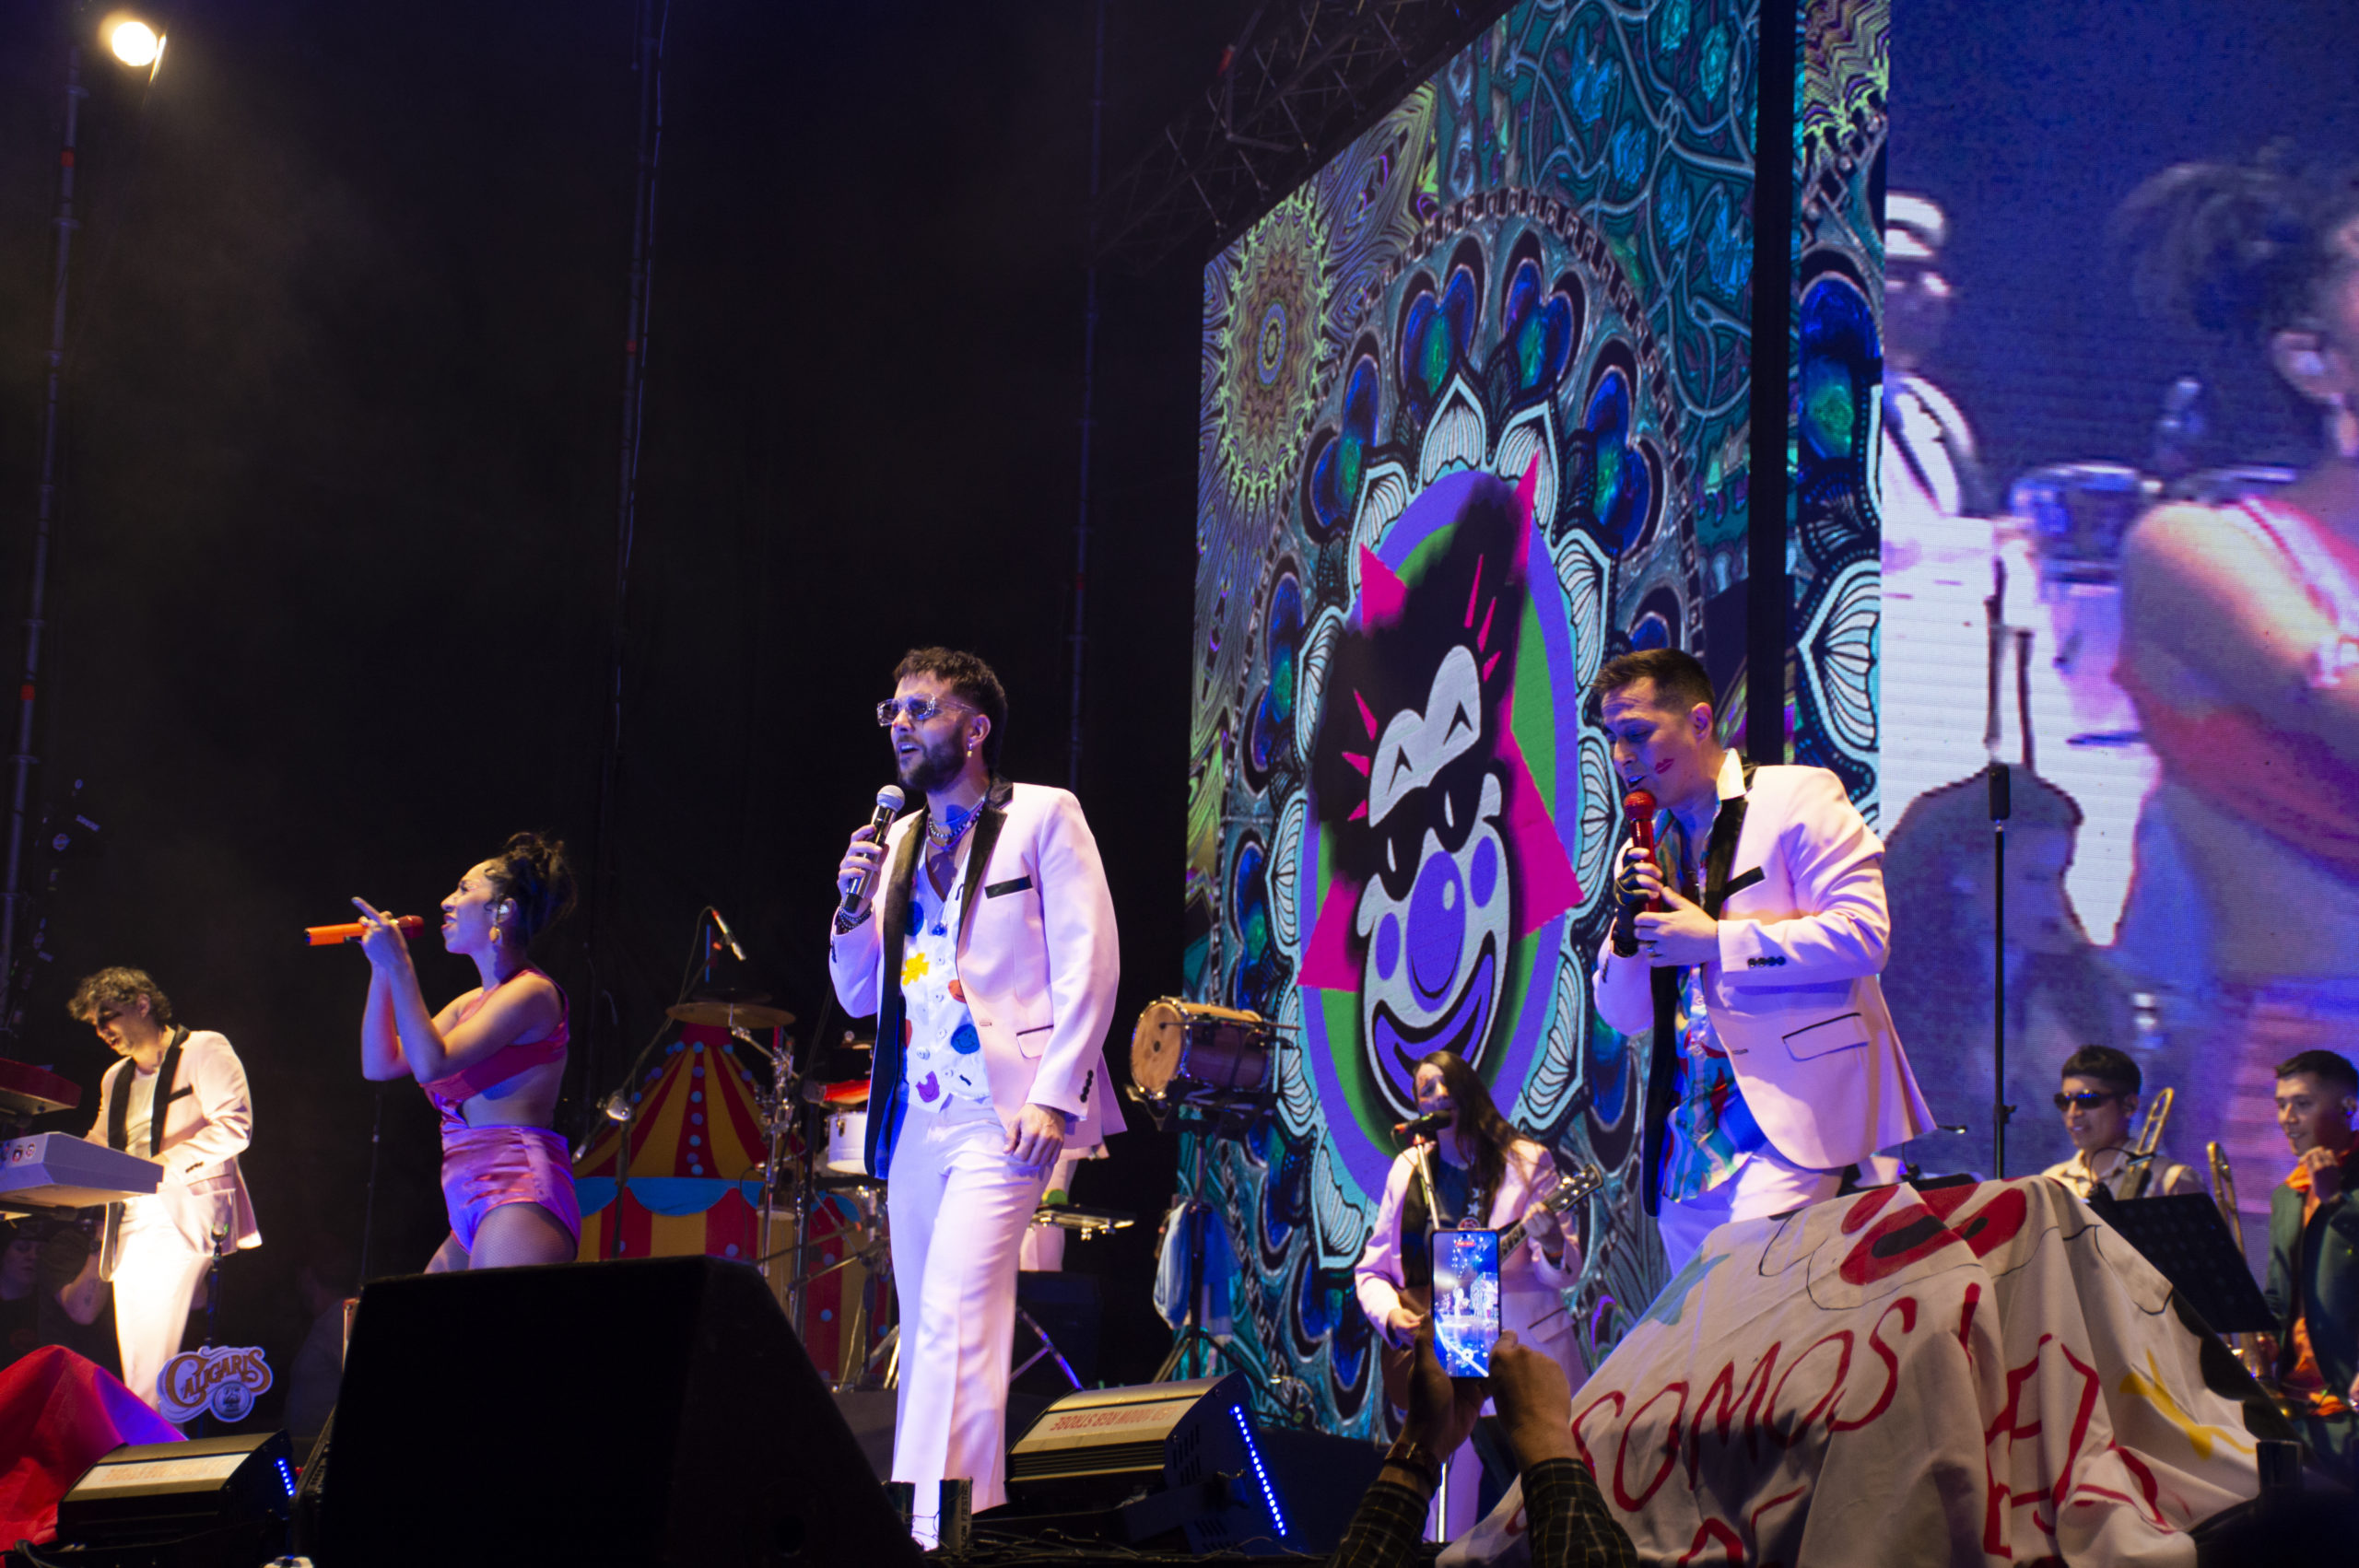 “Veinticirco”, la gira de Los Caligaris en Córdoba!  • Canal C